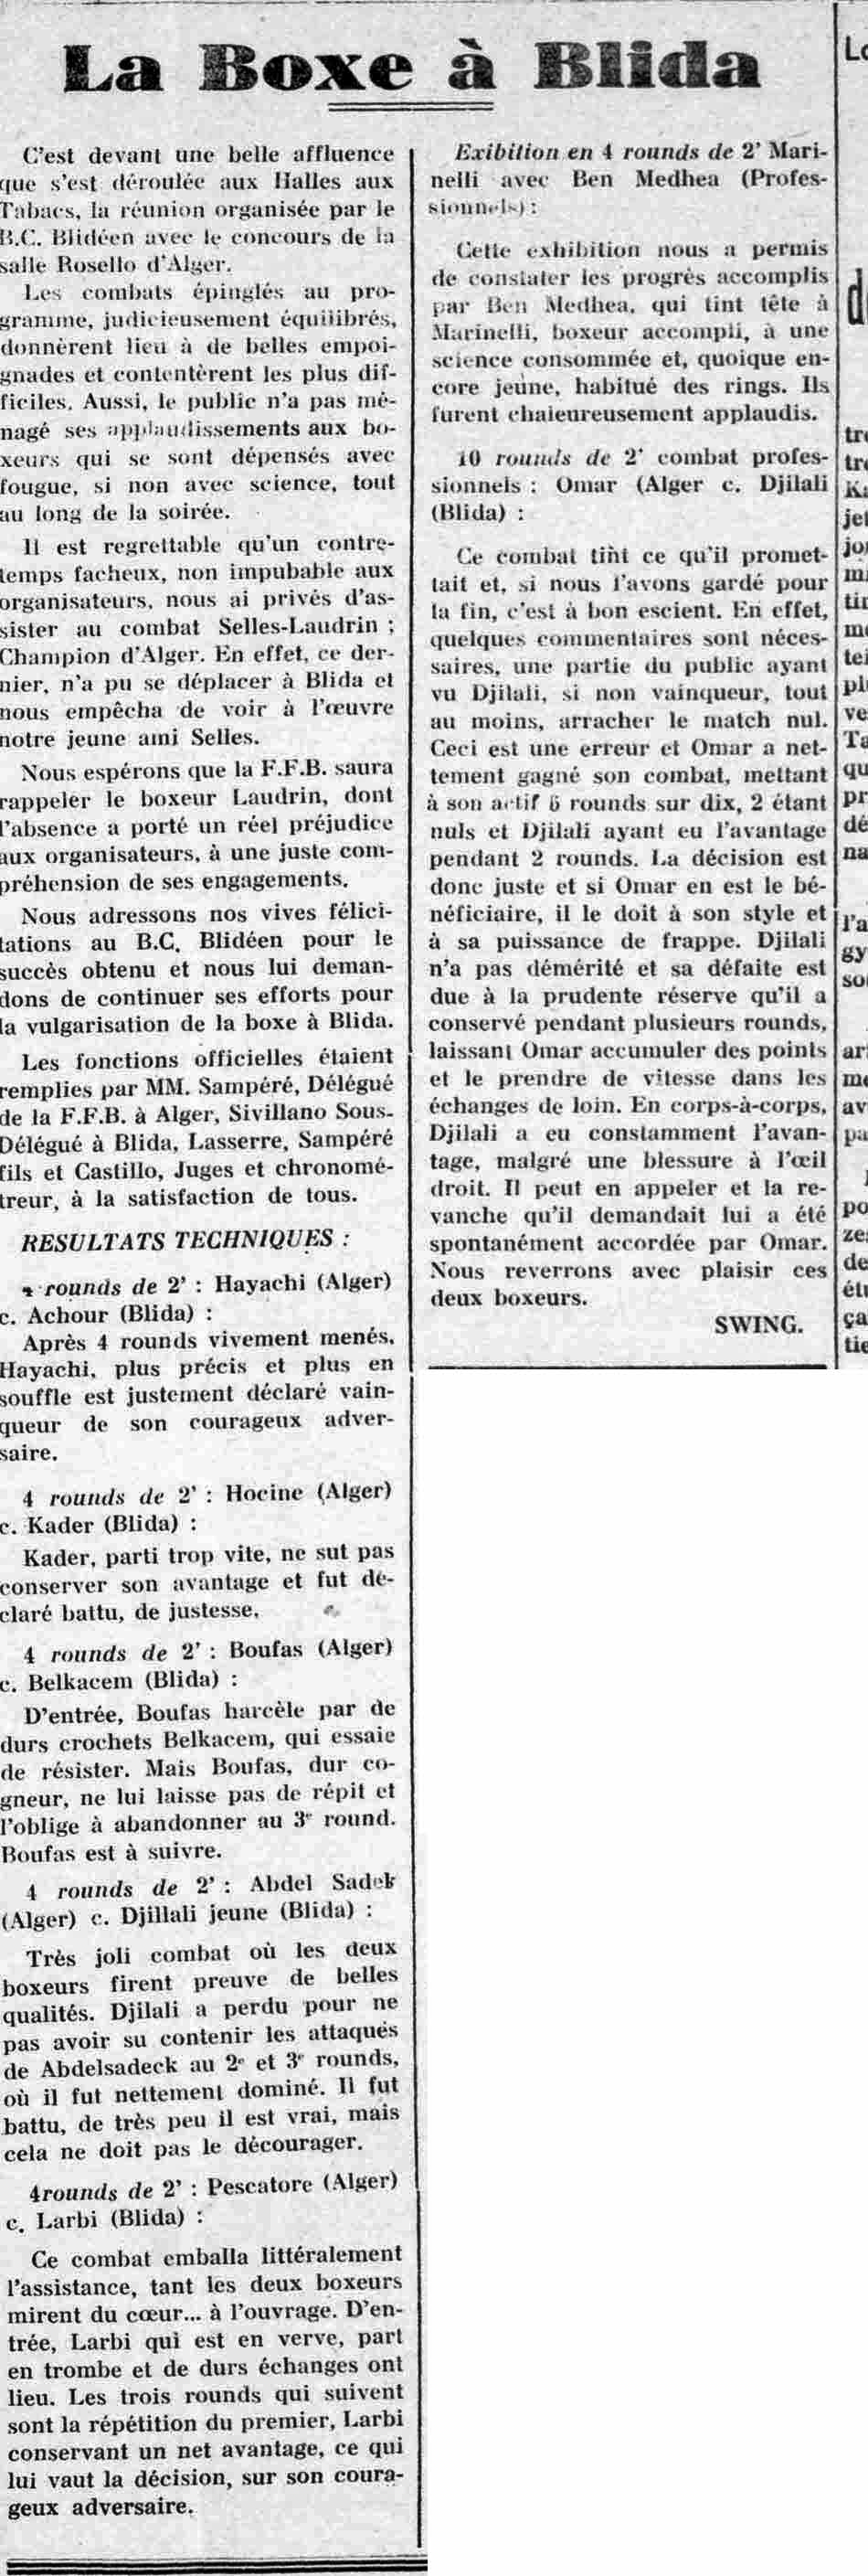 La_Province_sportive_1937-11-25-boxe.jpg